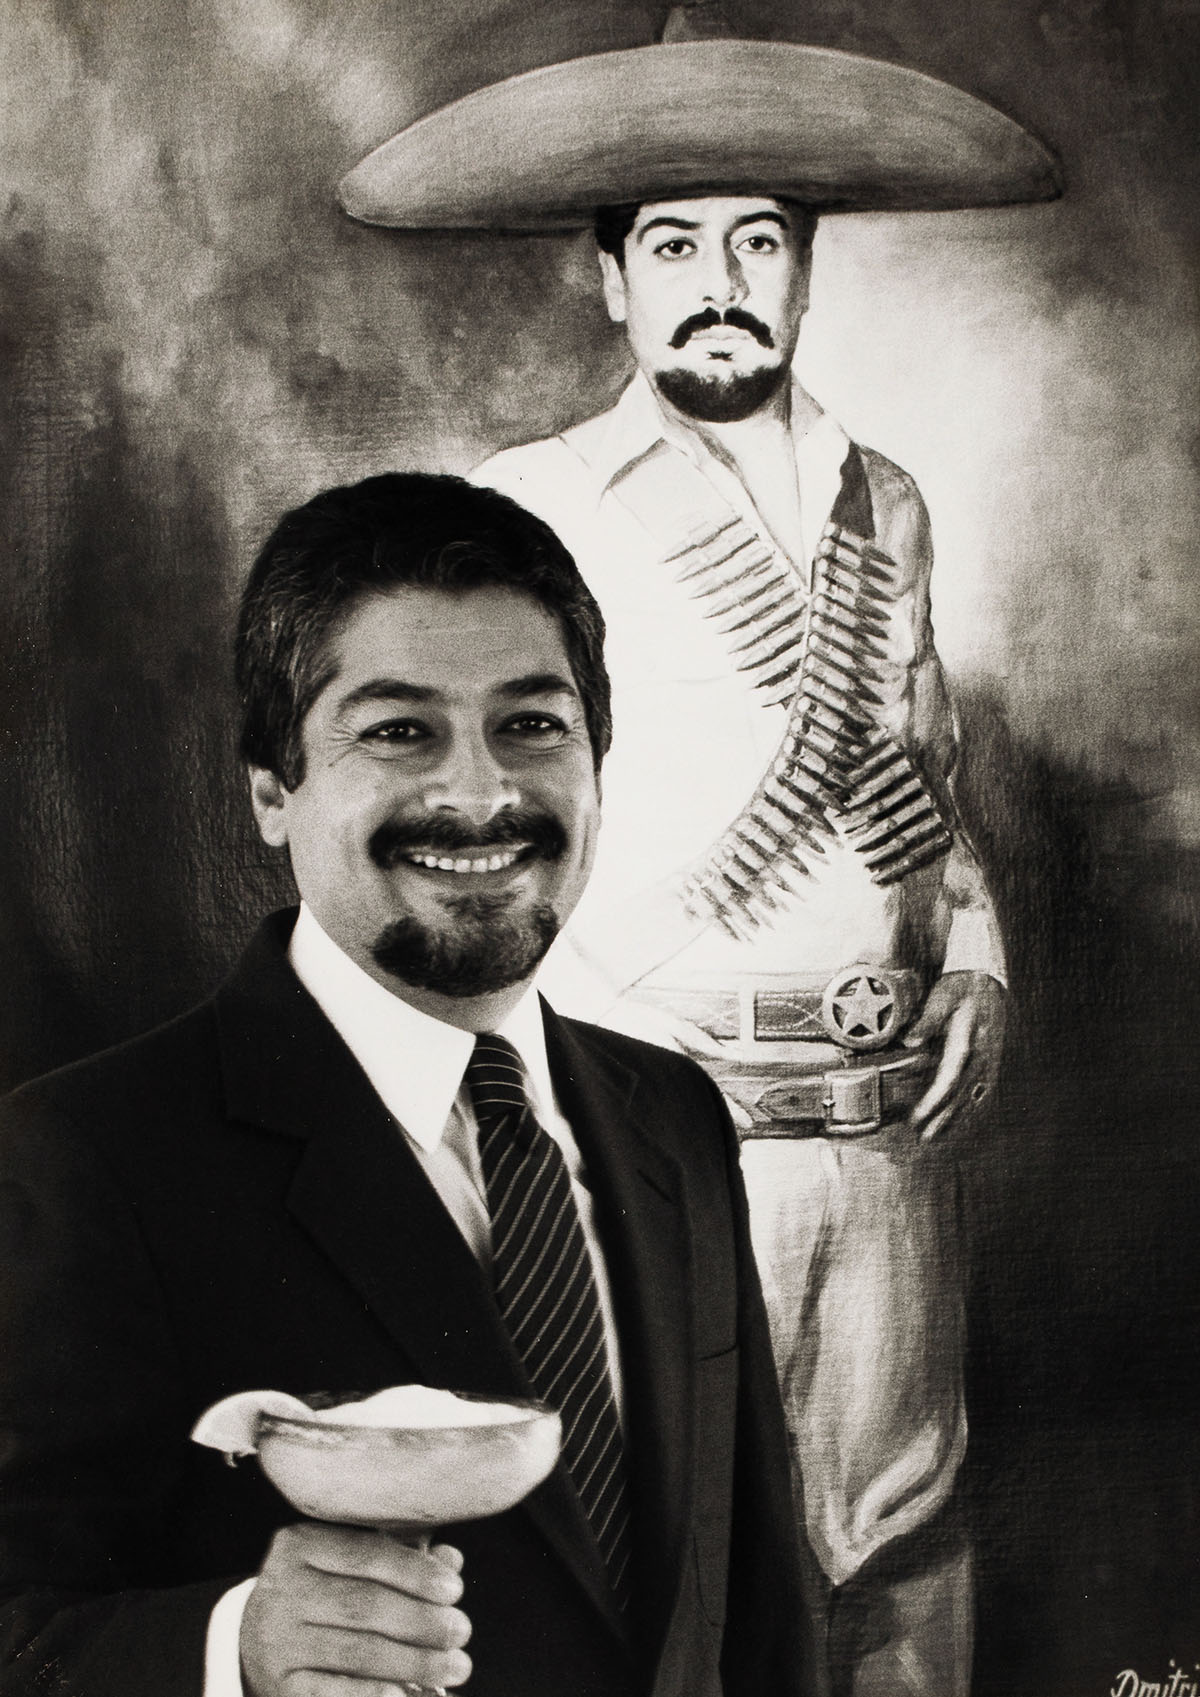 Mariano Martinez holding a frozen margarita